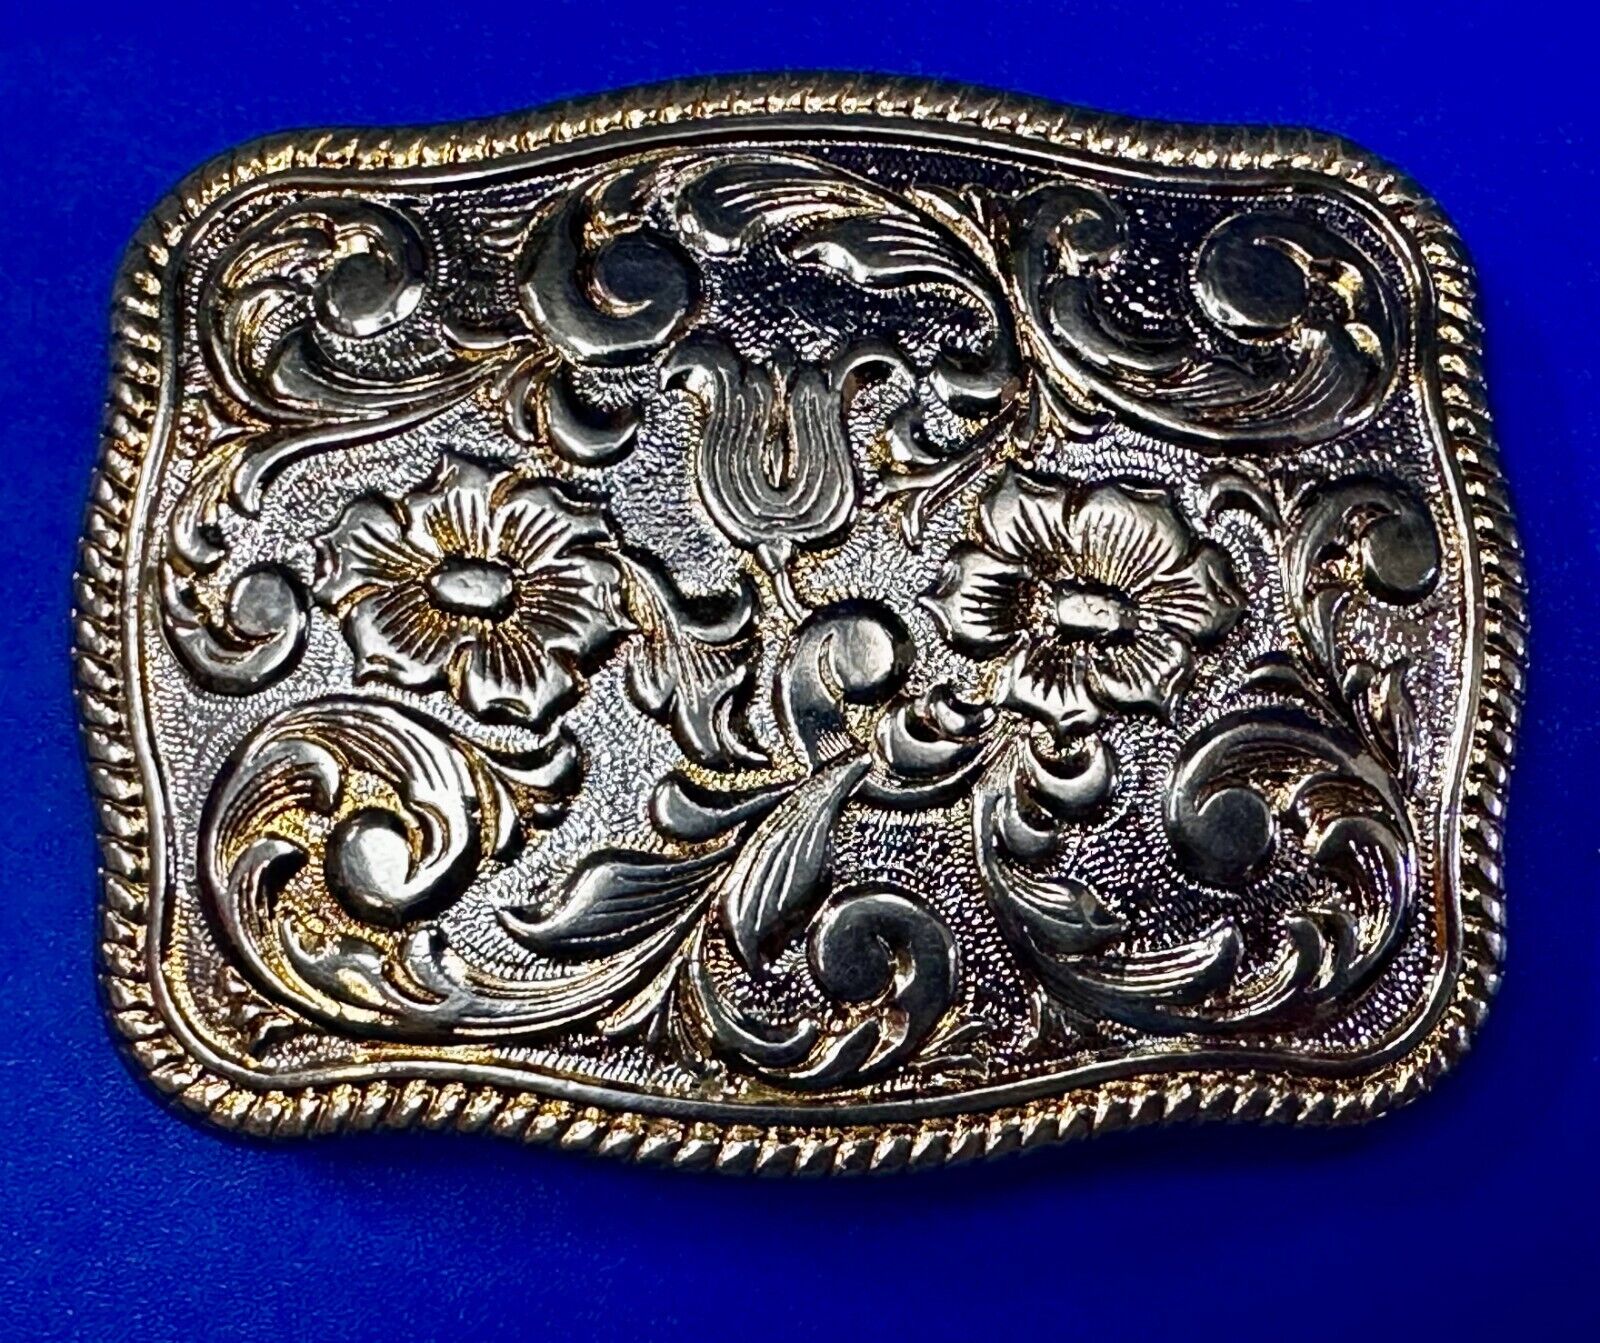 Chambers Brand 24k Gold Plated Vintage western flower swirl design belt buckle